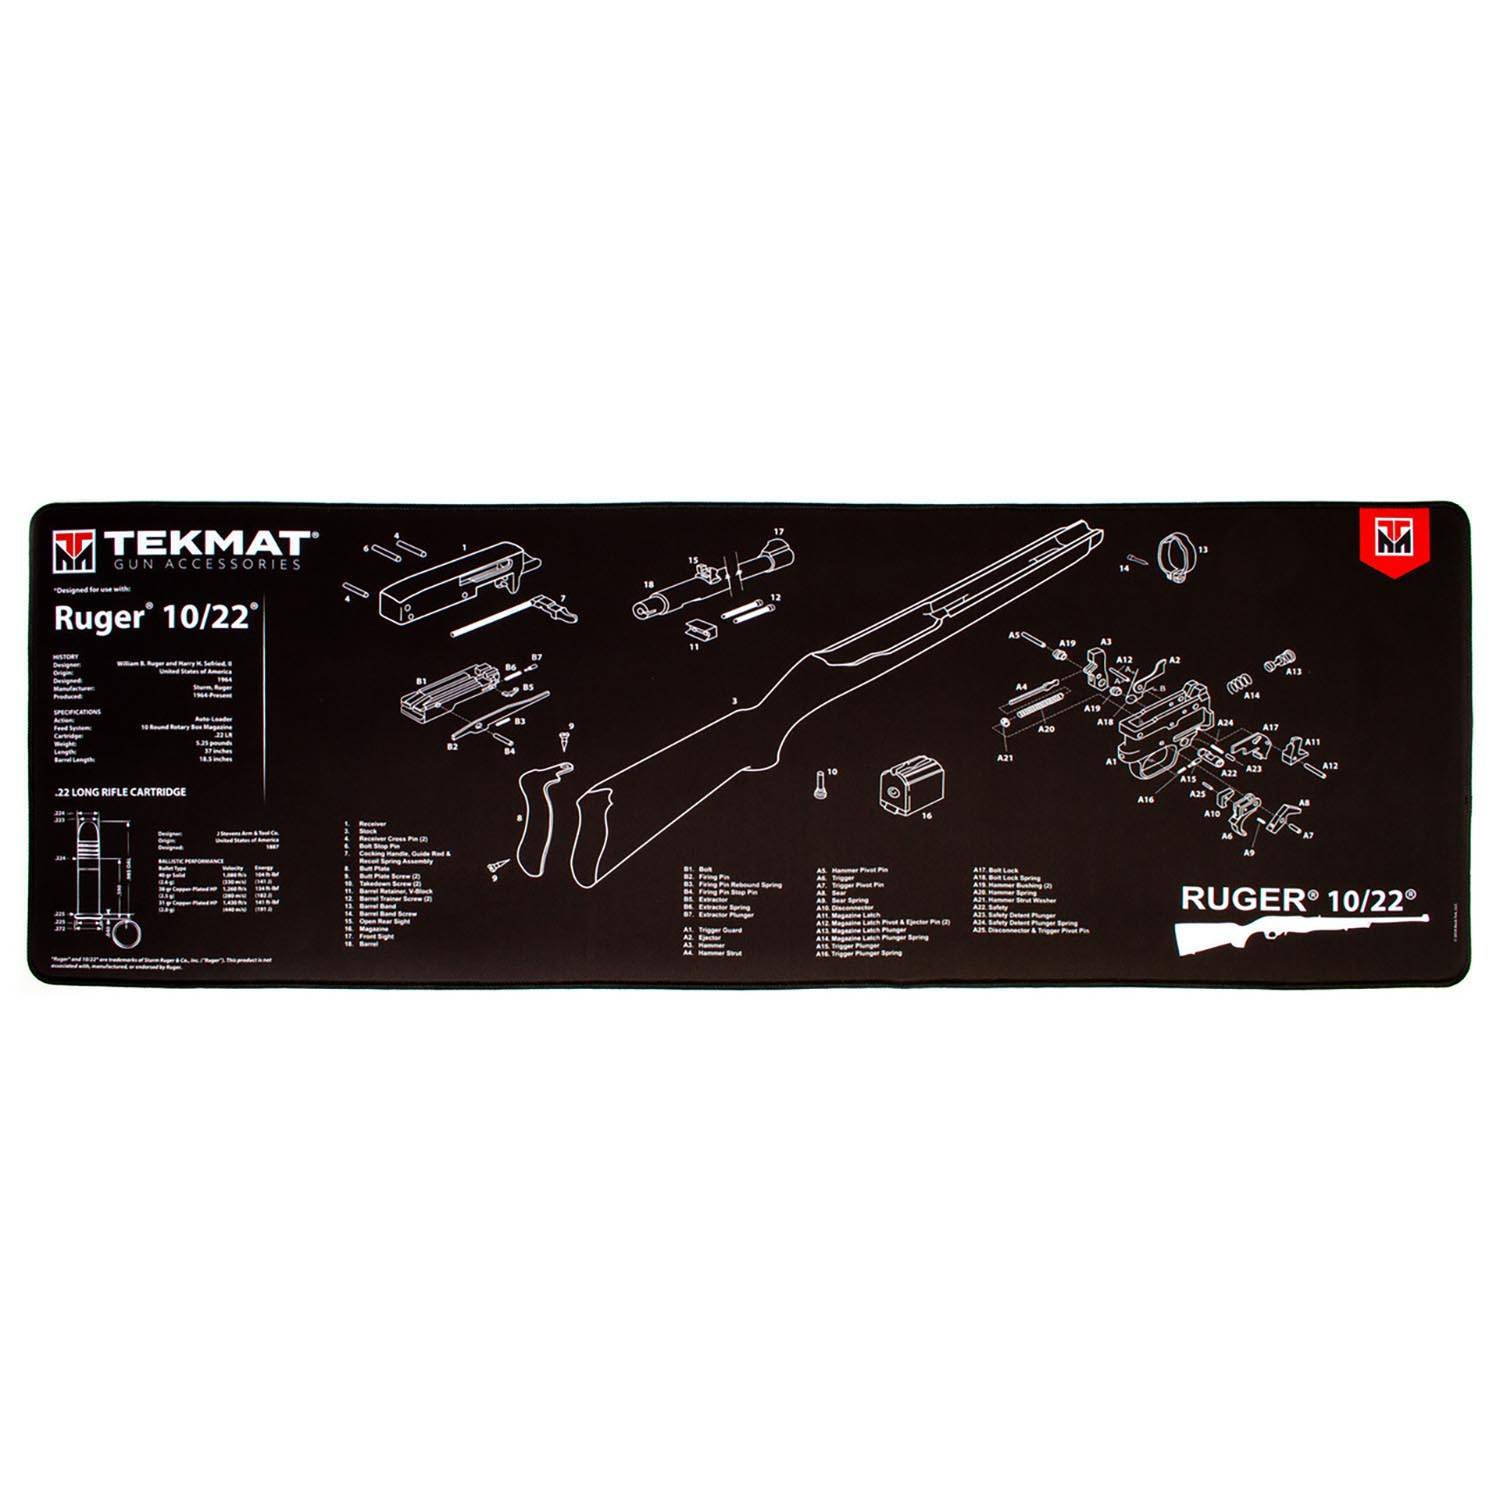 TekMat Ruger 1022 Ultra Premium Gun Cleaning Mat 44"